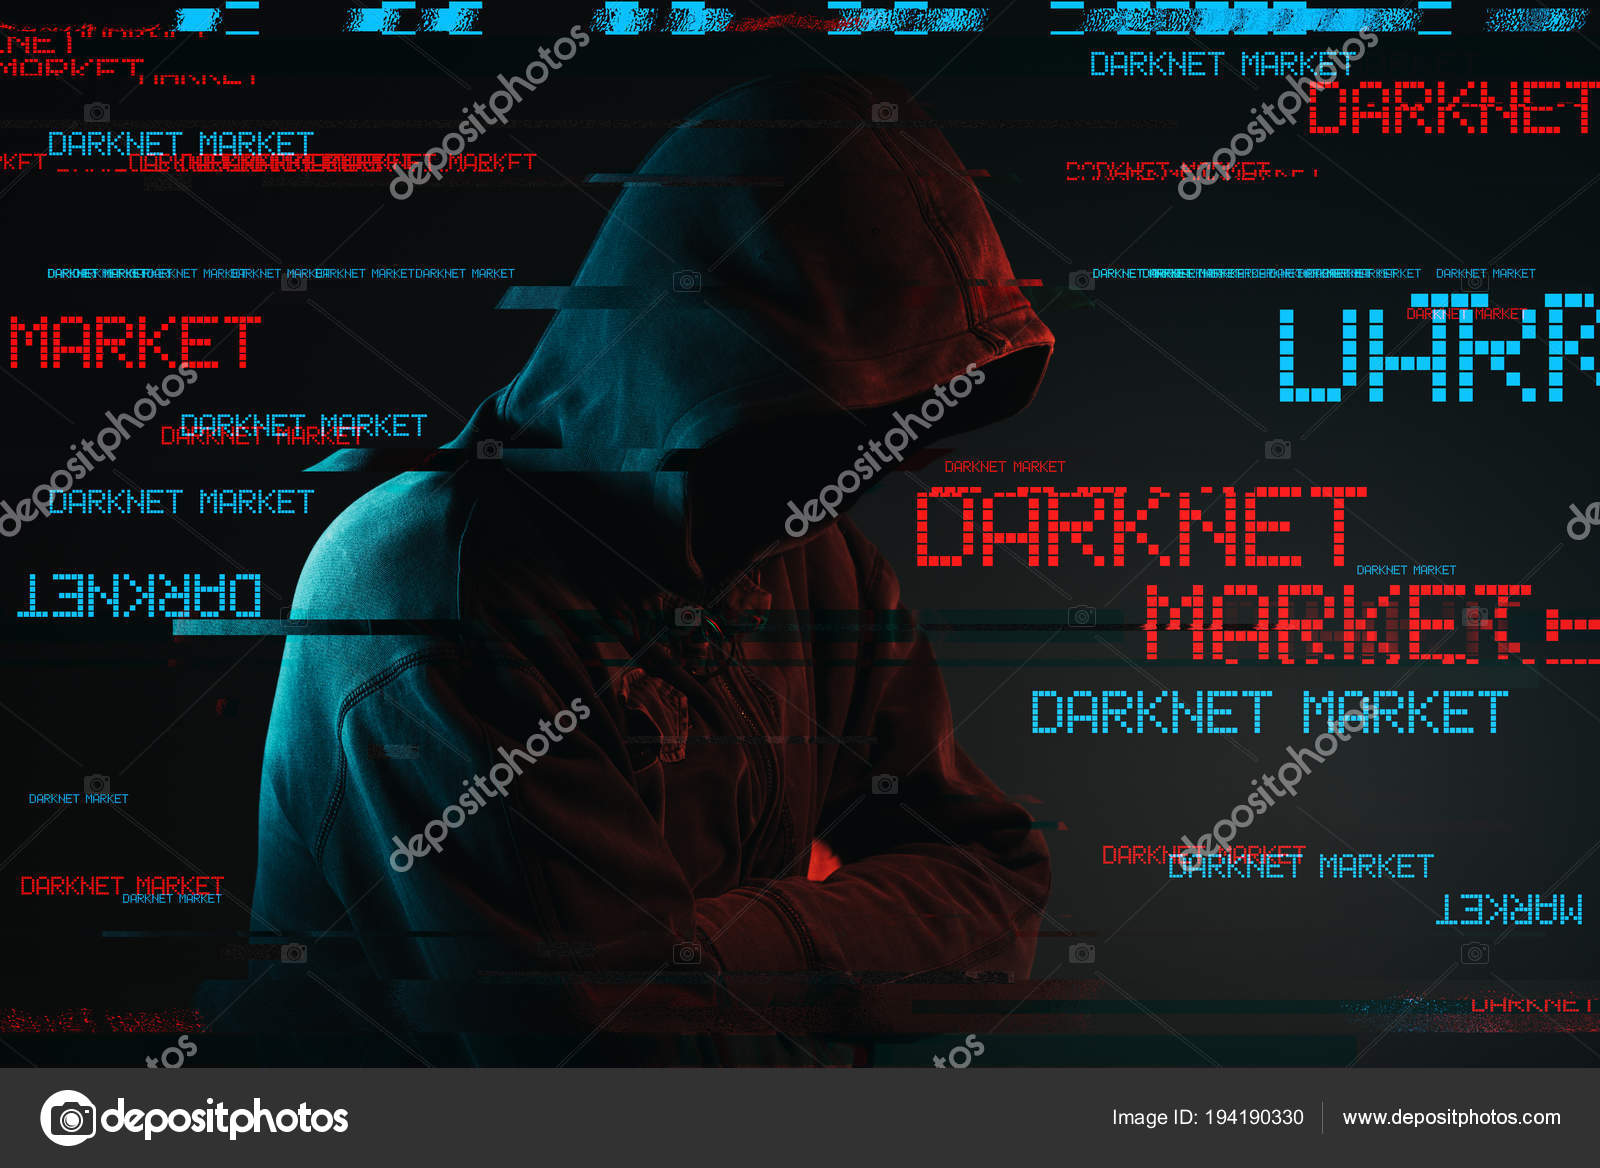 darknet images